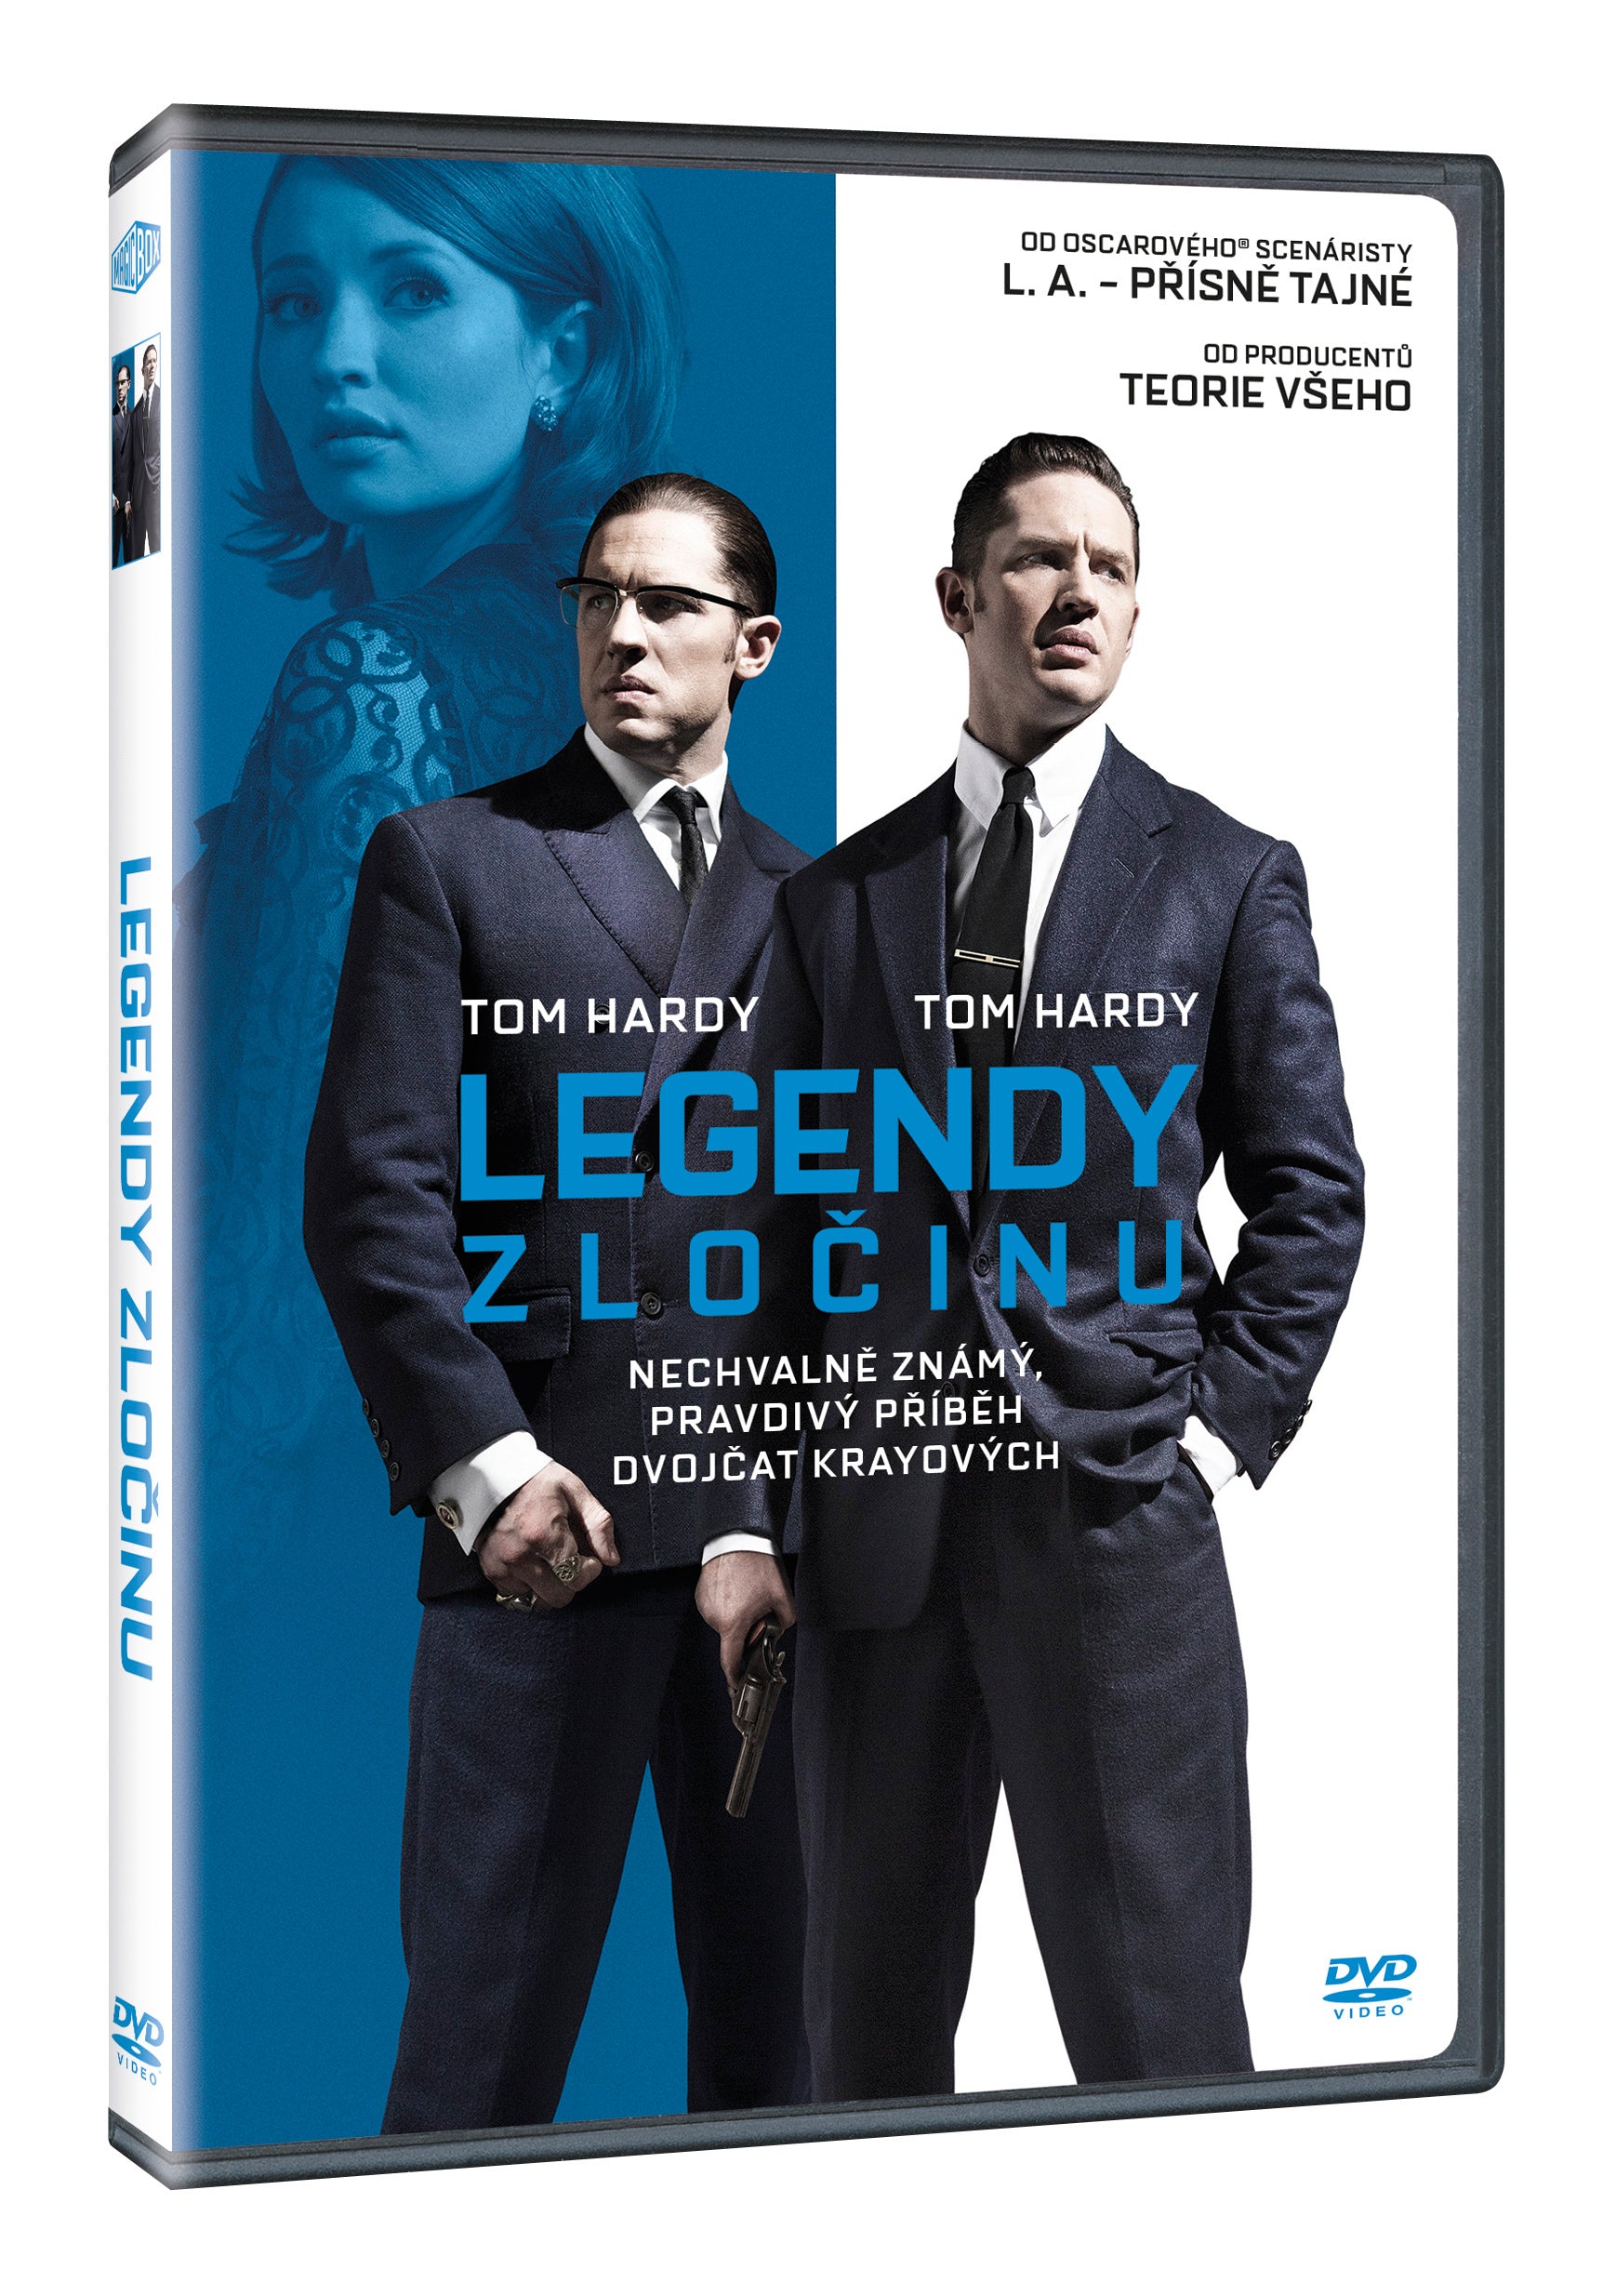 Legendy zlocinu DVD / Legend